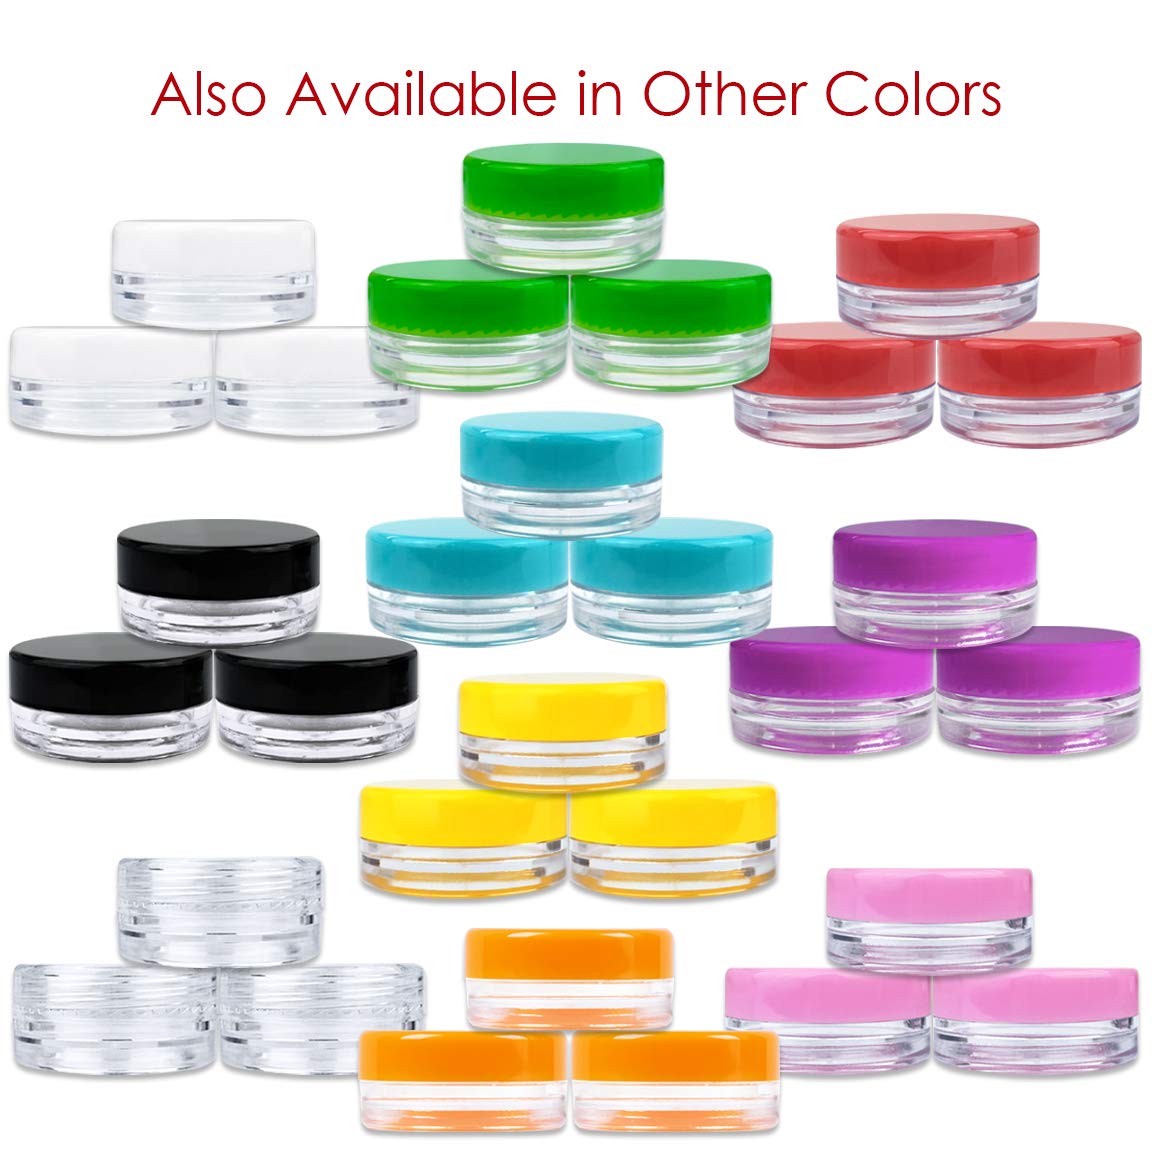 Beauticom (100 Pieces Jars + Lid) 3G/3ML Round Clear Jars with White Screw Cap Lids for Scrubs, Oils, Toner, Salves, Creams, Lotions, Makeup Samples, Lip Balms - BPA Free